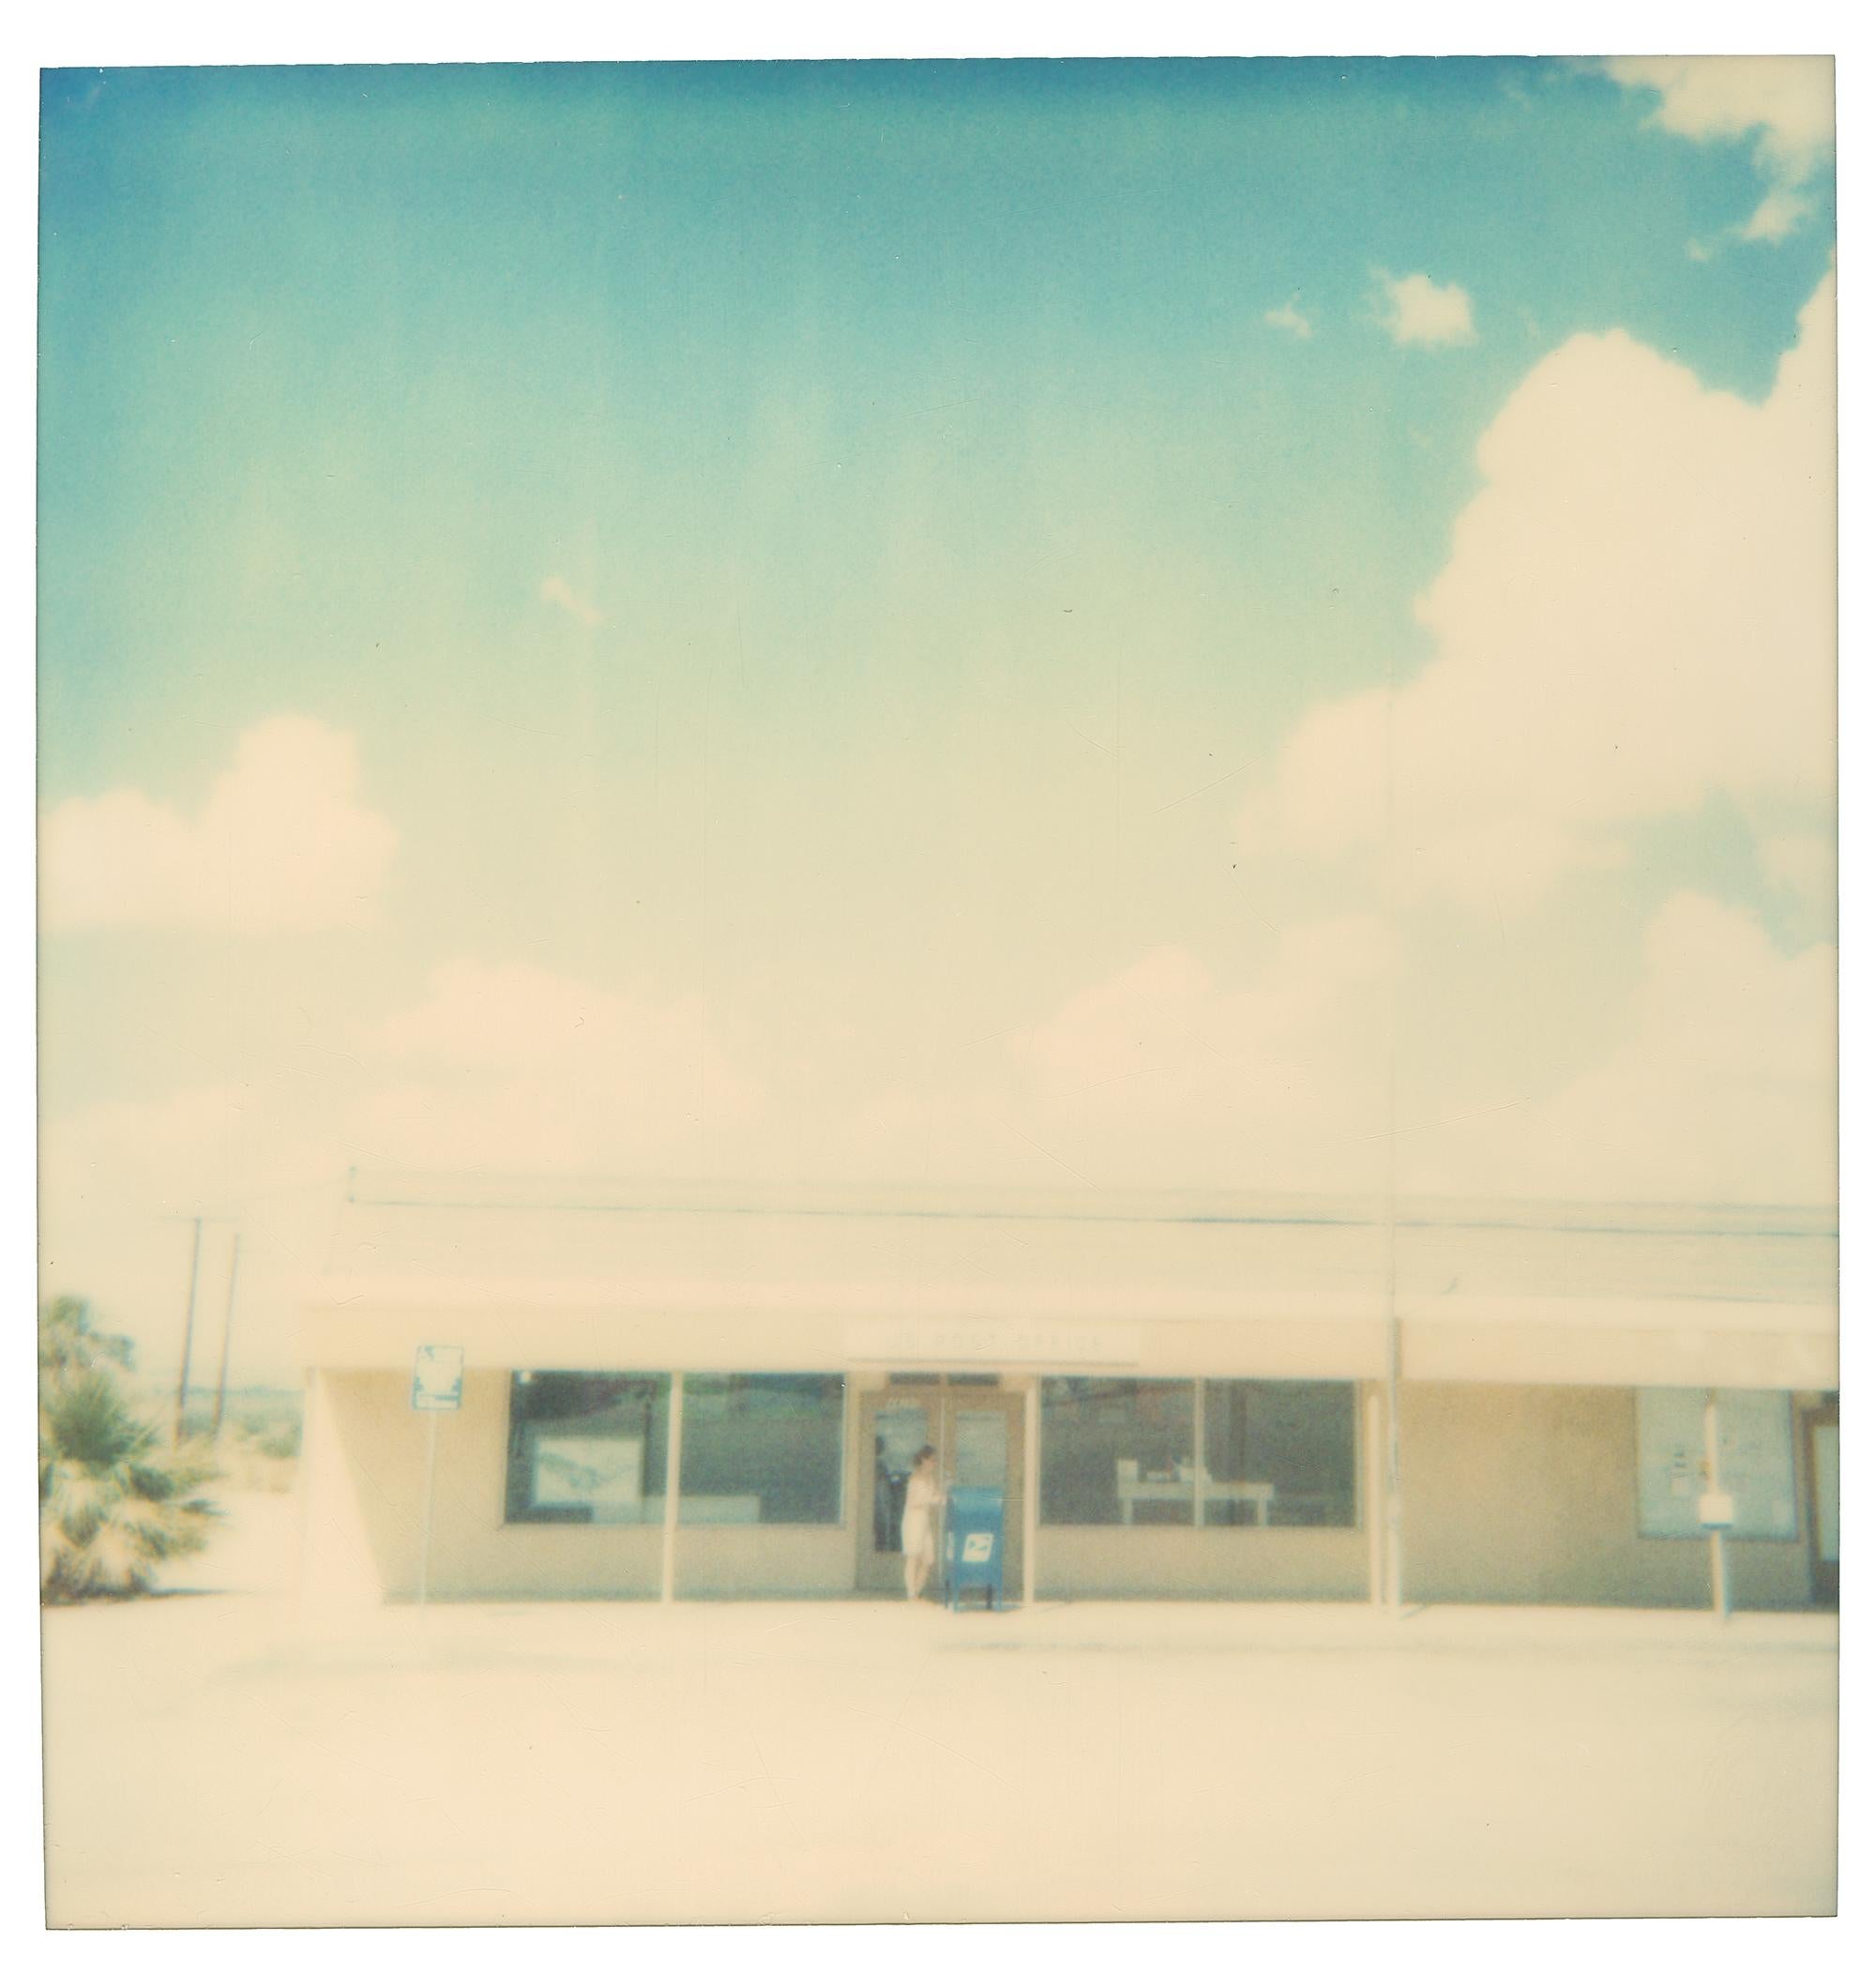 Still-Life Photograph Stefanie Schneider - Ciel nuageux (29 Palms, CA) - Polaroid, Contemporary